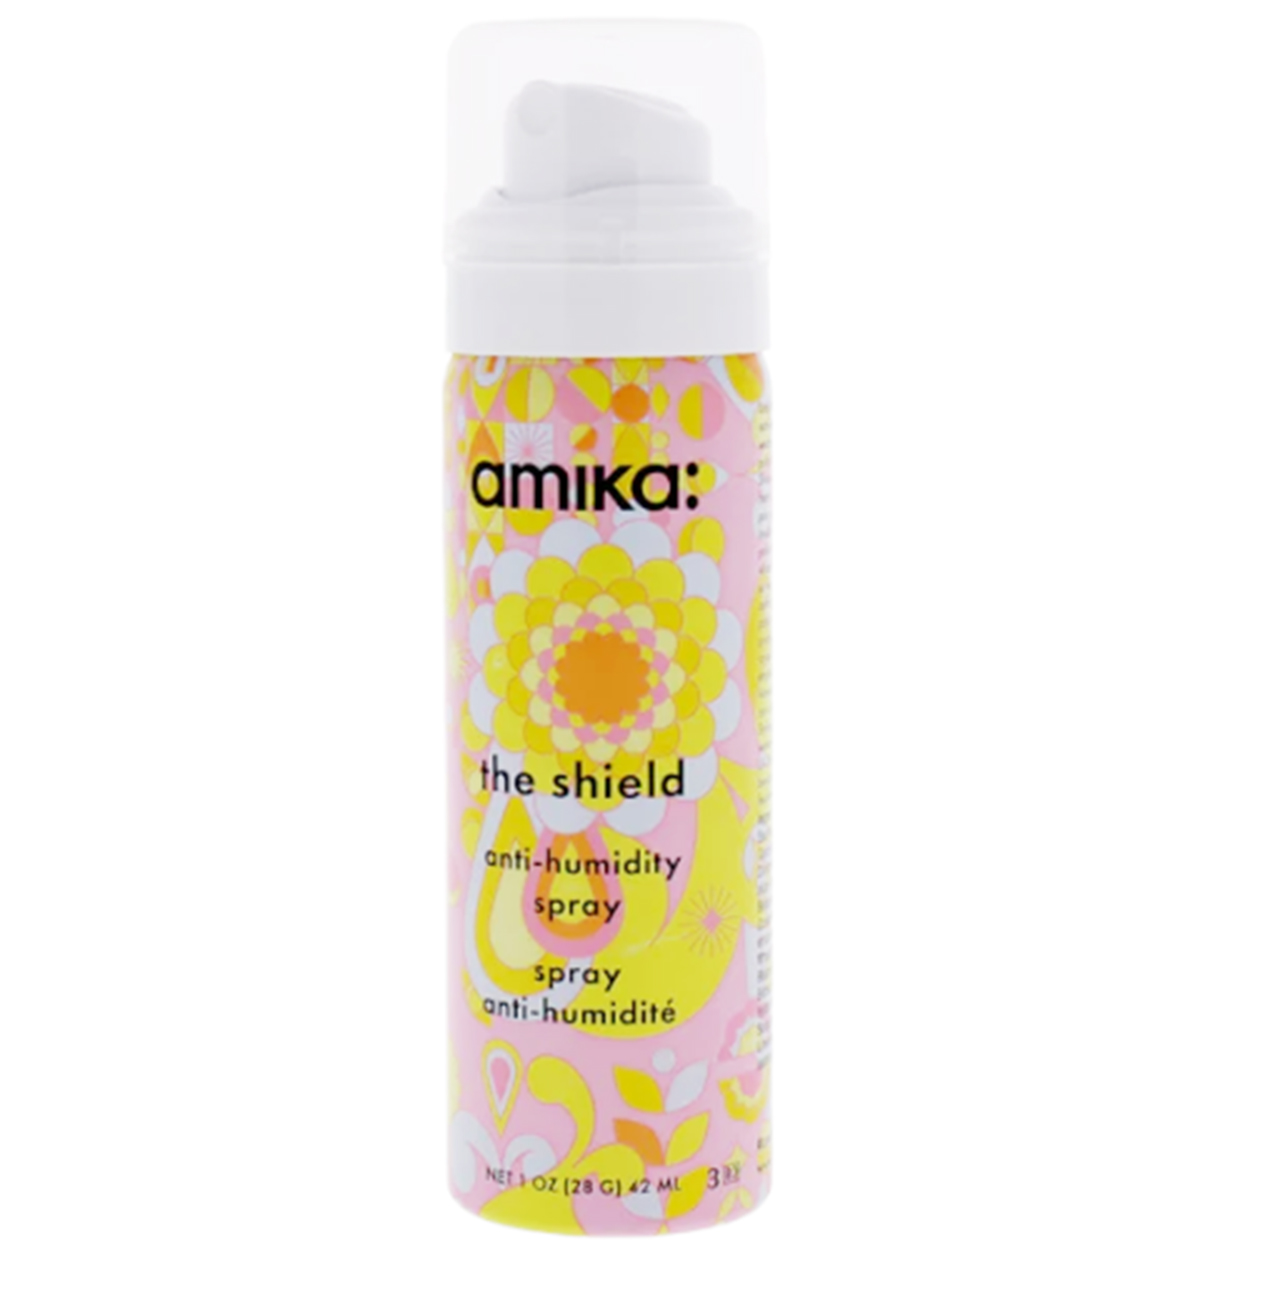 Amika The Shield Anti-humidity Spray - 1 oz (80778) Questions & Answers